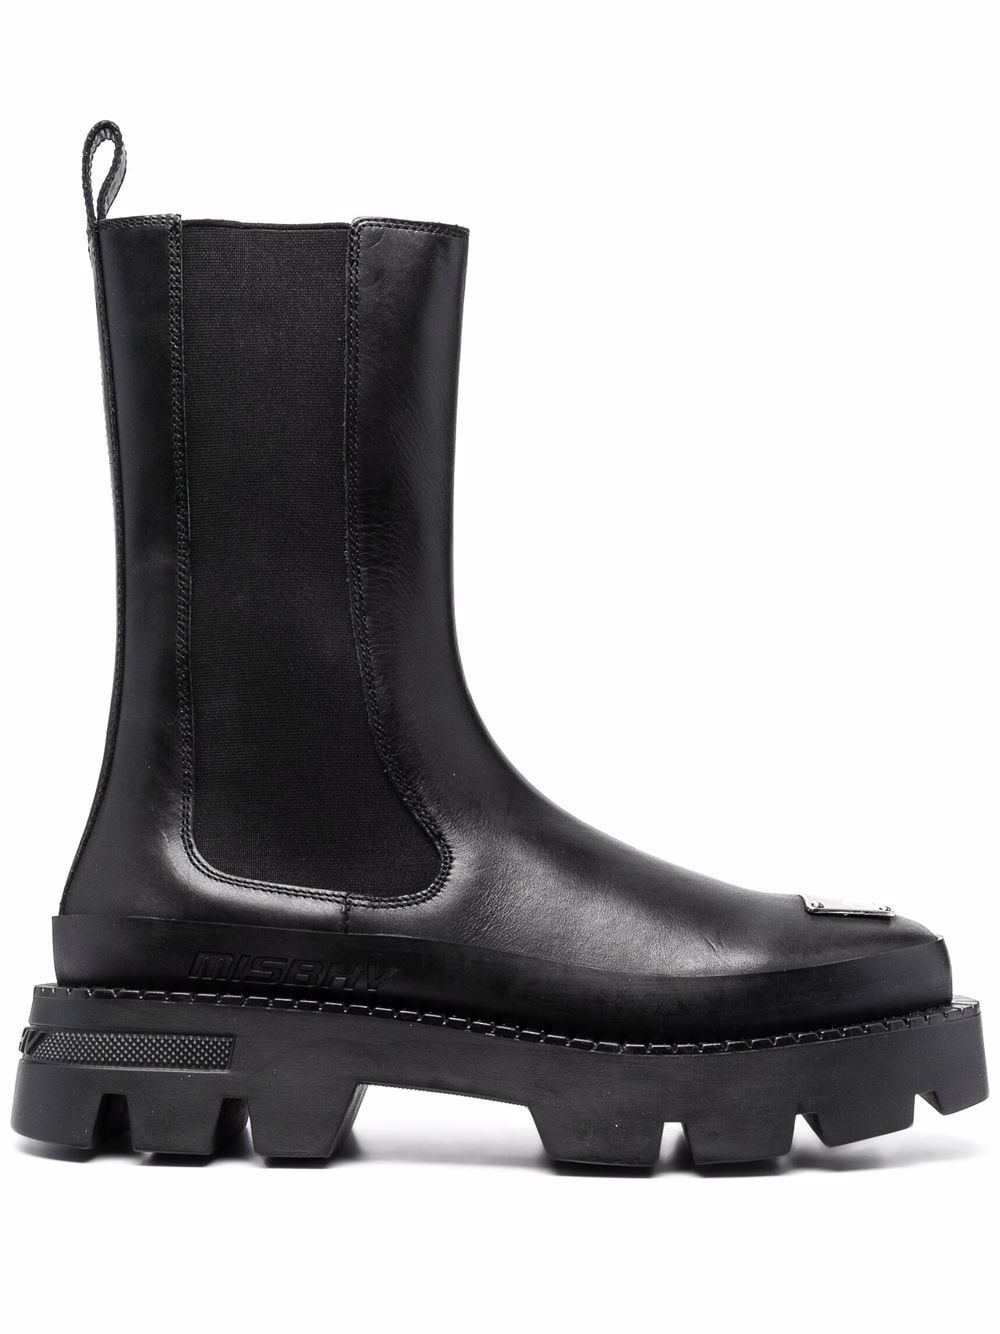 ridged-sole boots